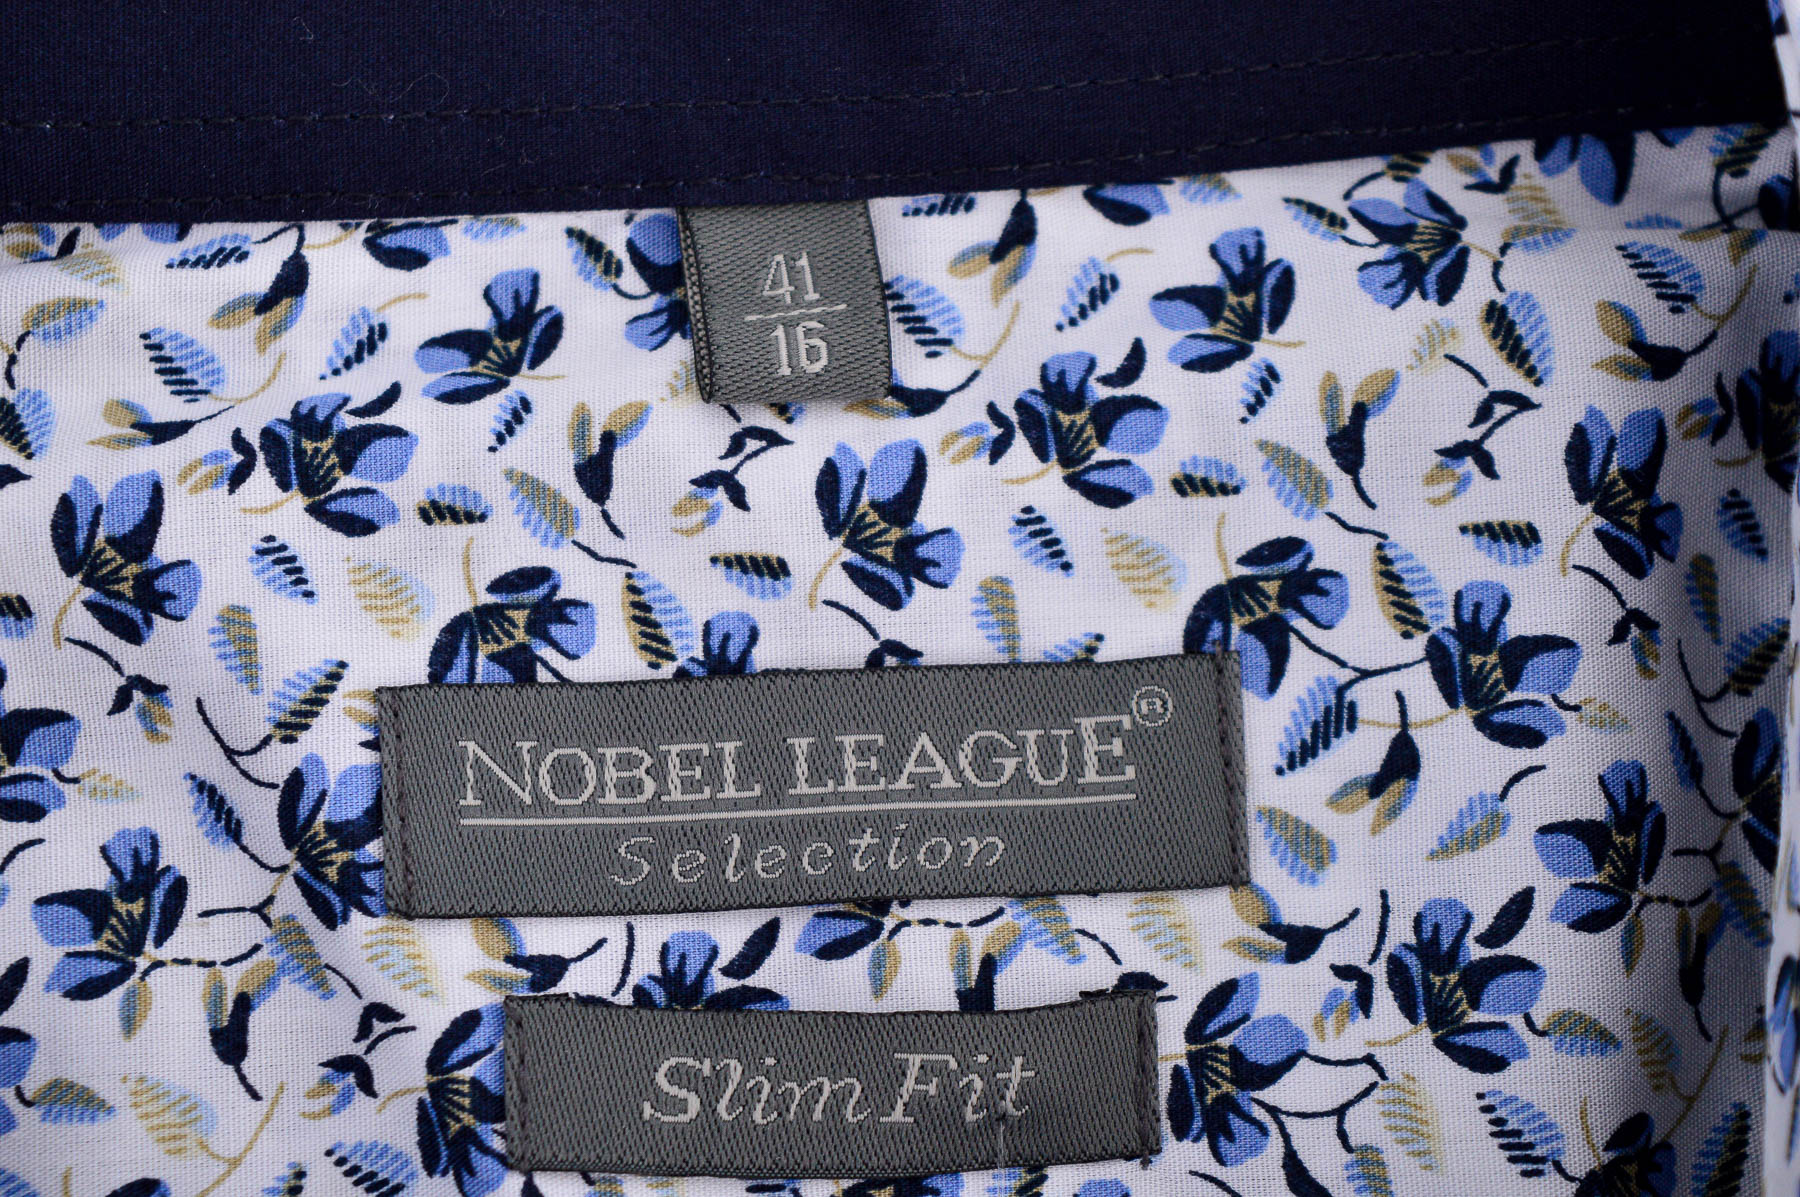 Men's shirt - Nobel League - 2